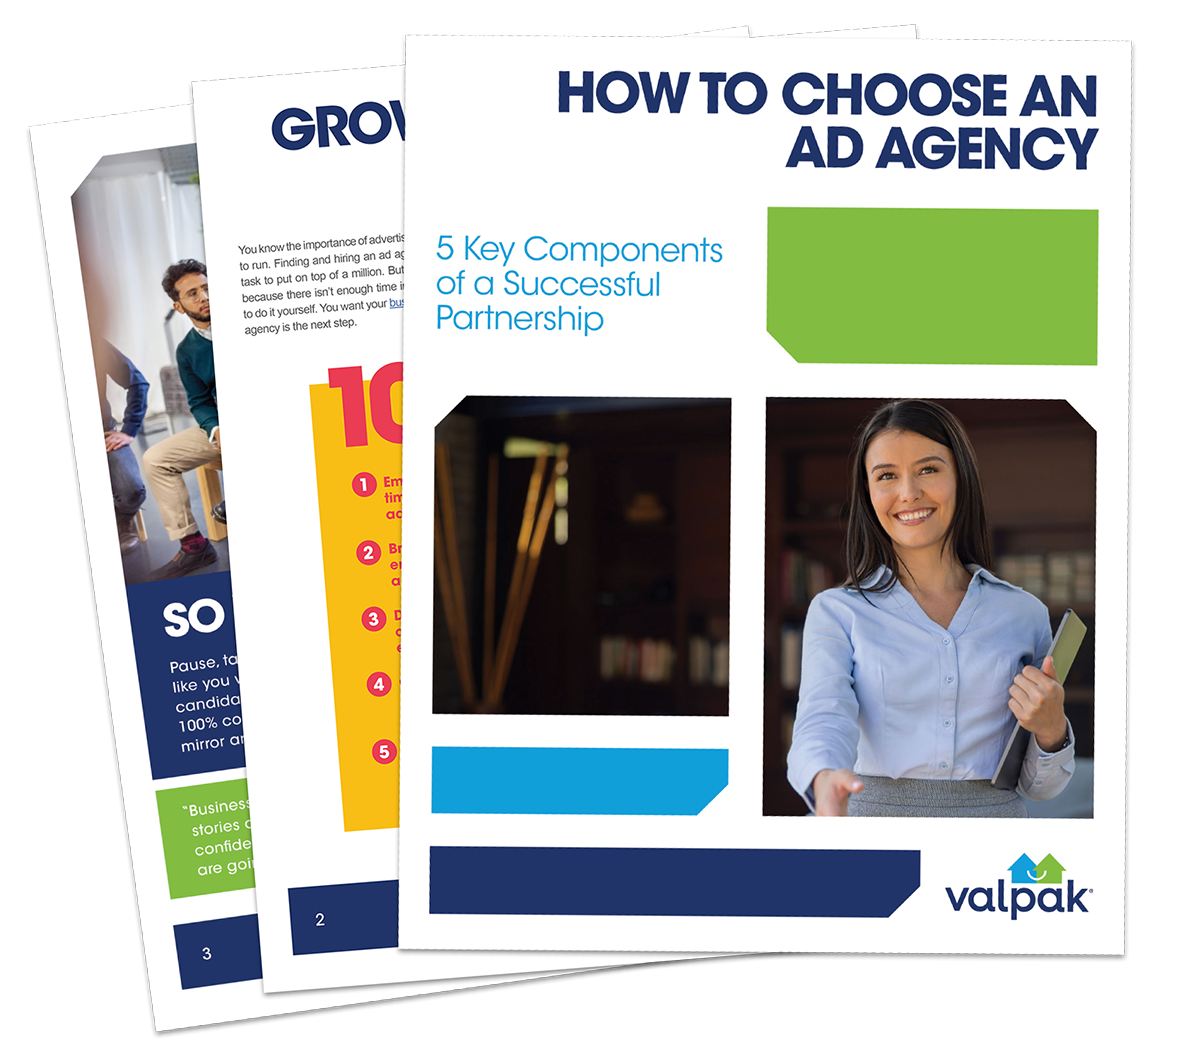 valpak-how-to-choose-an-ad-agency-header